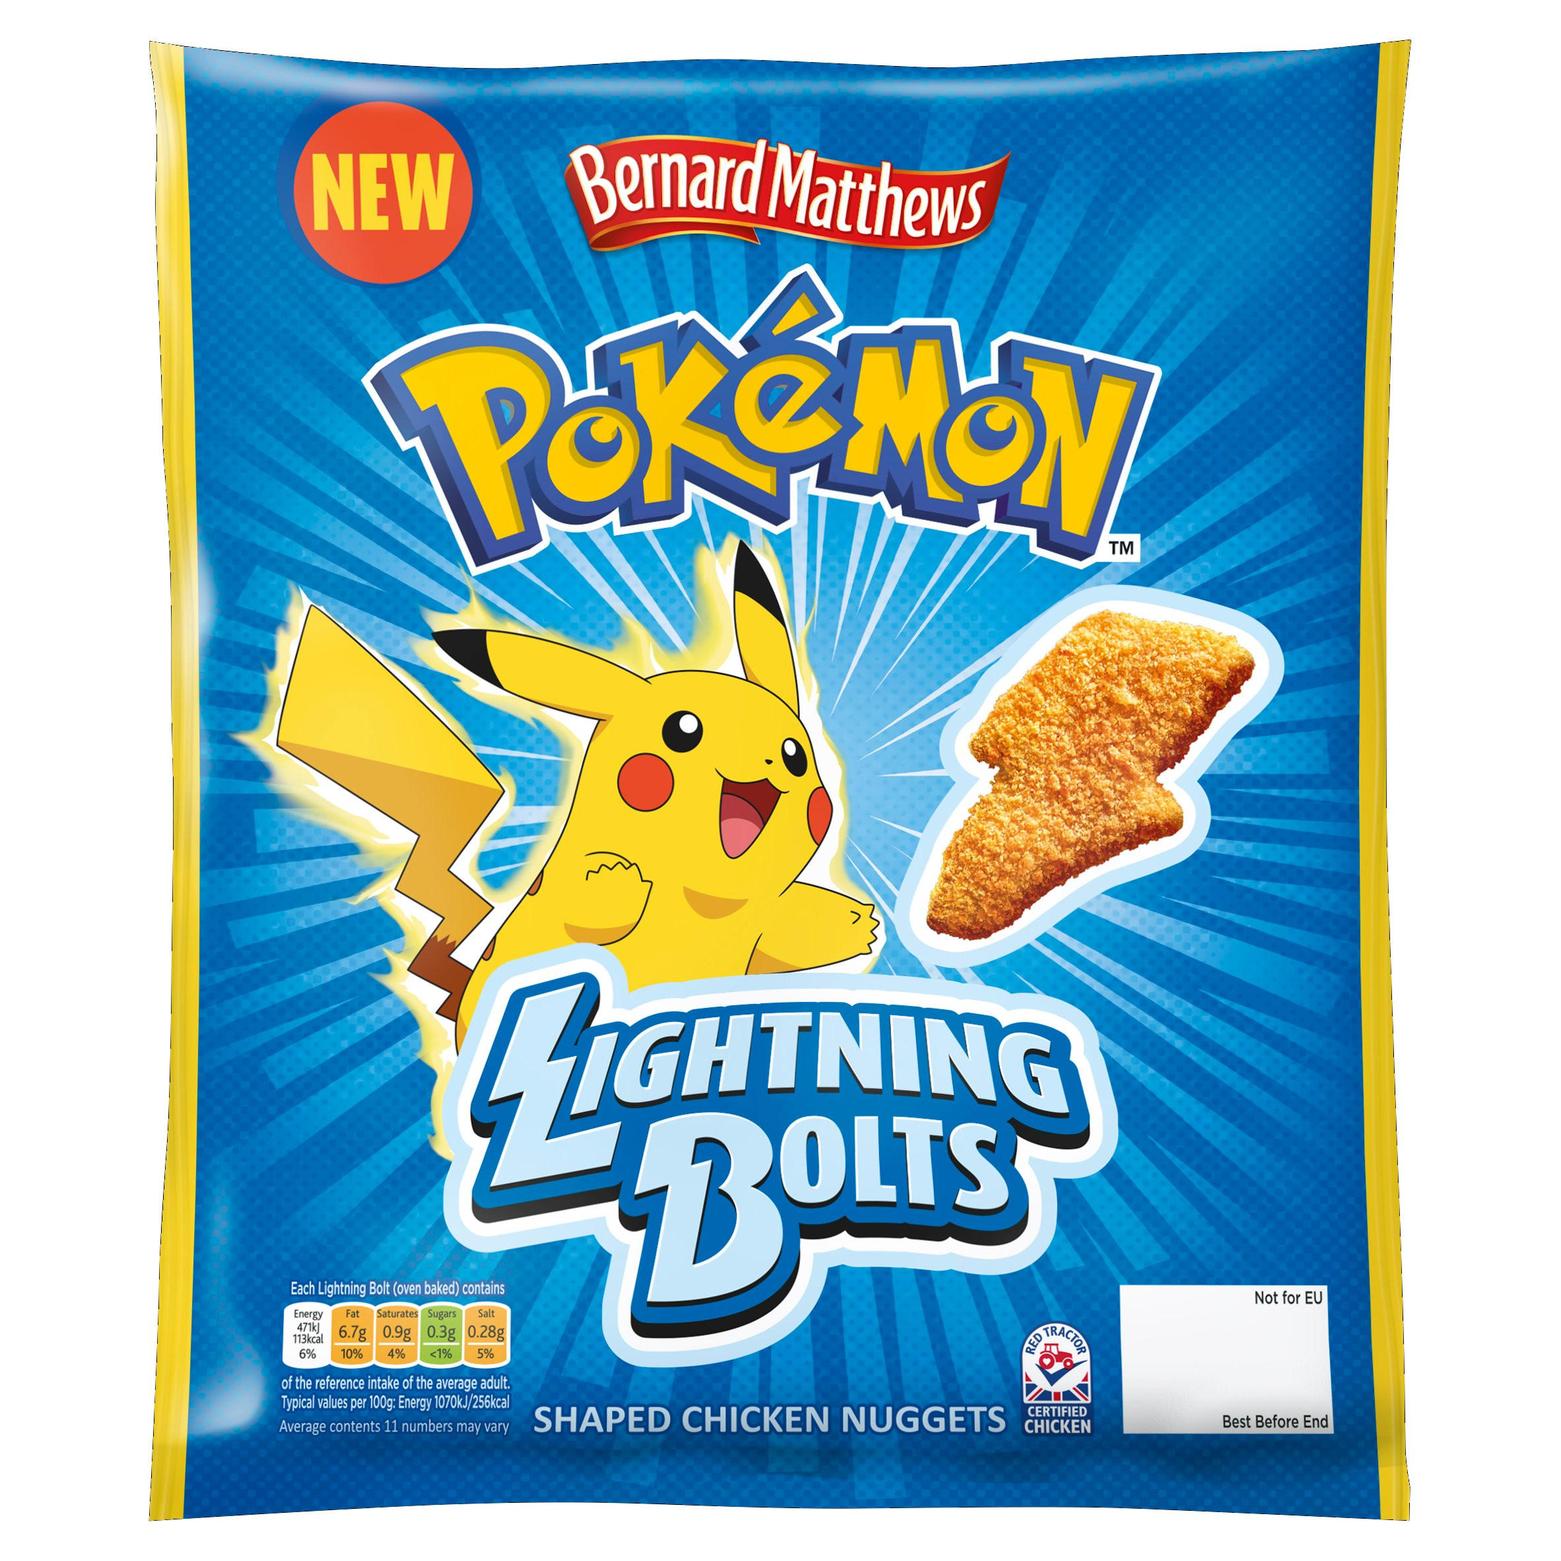 Bernard Matthews Pokemon Lightning Bolts 550g offers at £3.5 in Iceland